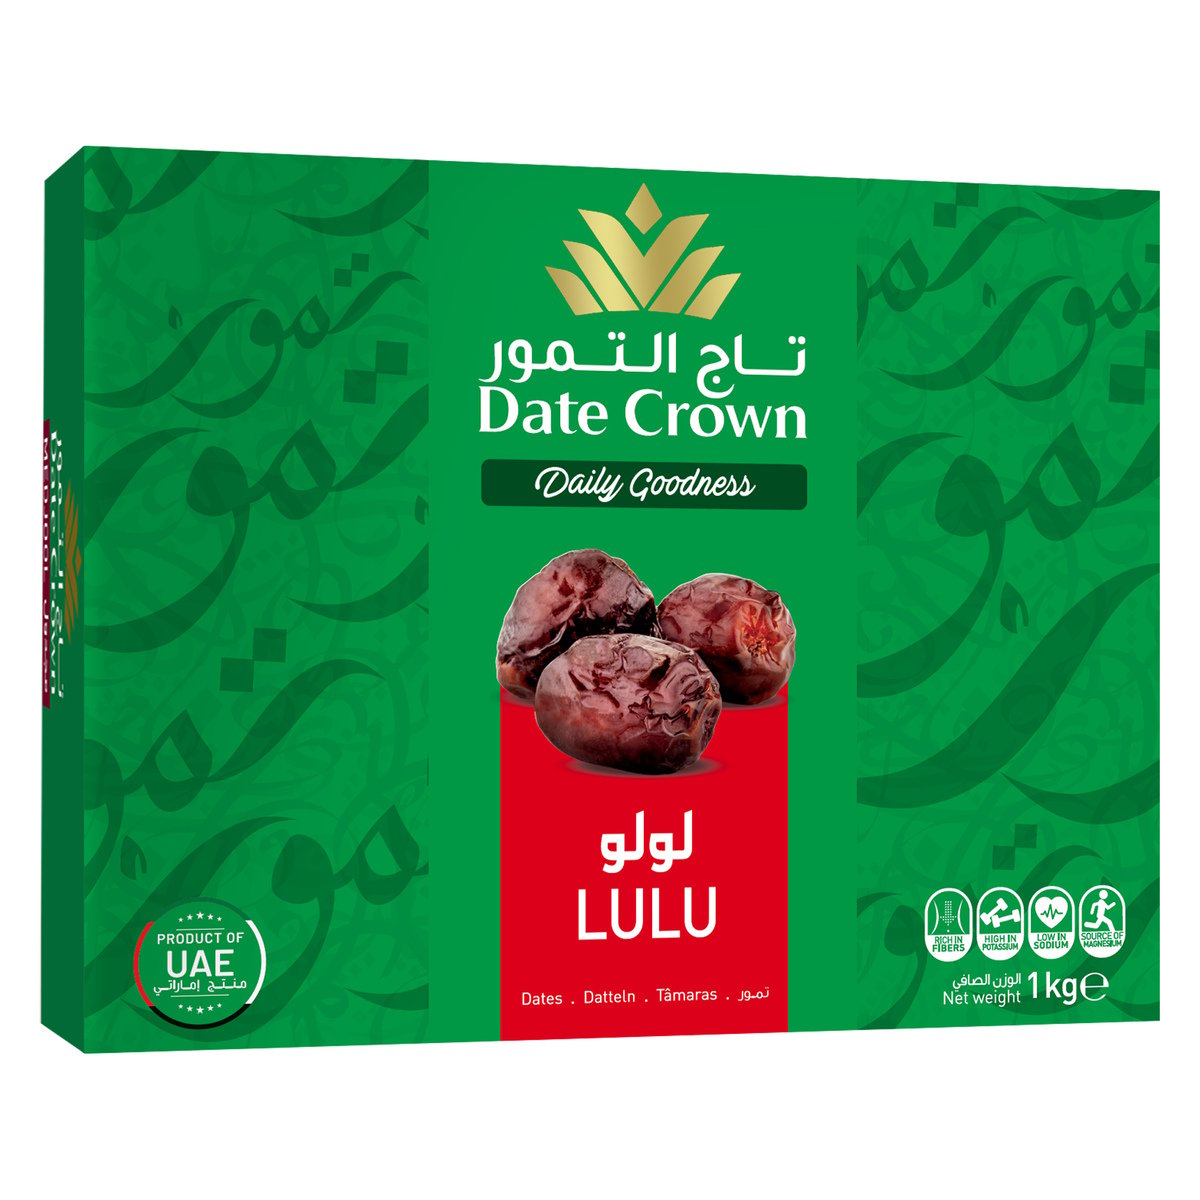 Date Crown LuLu Dates 1 kg